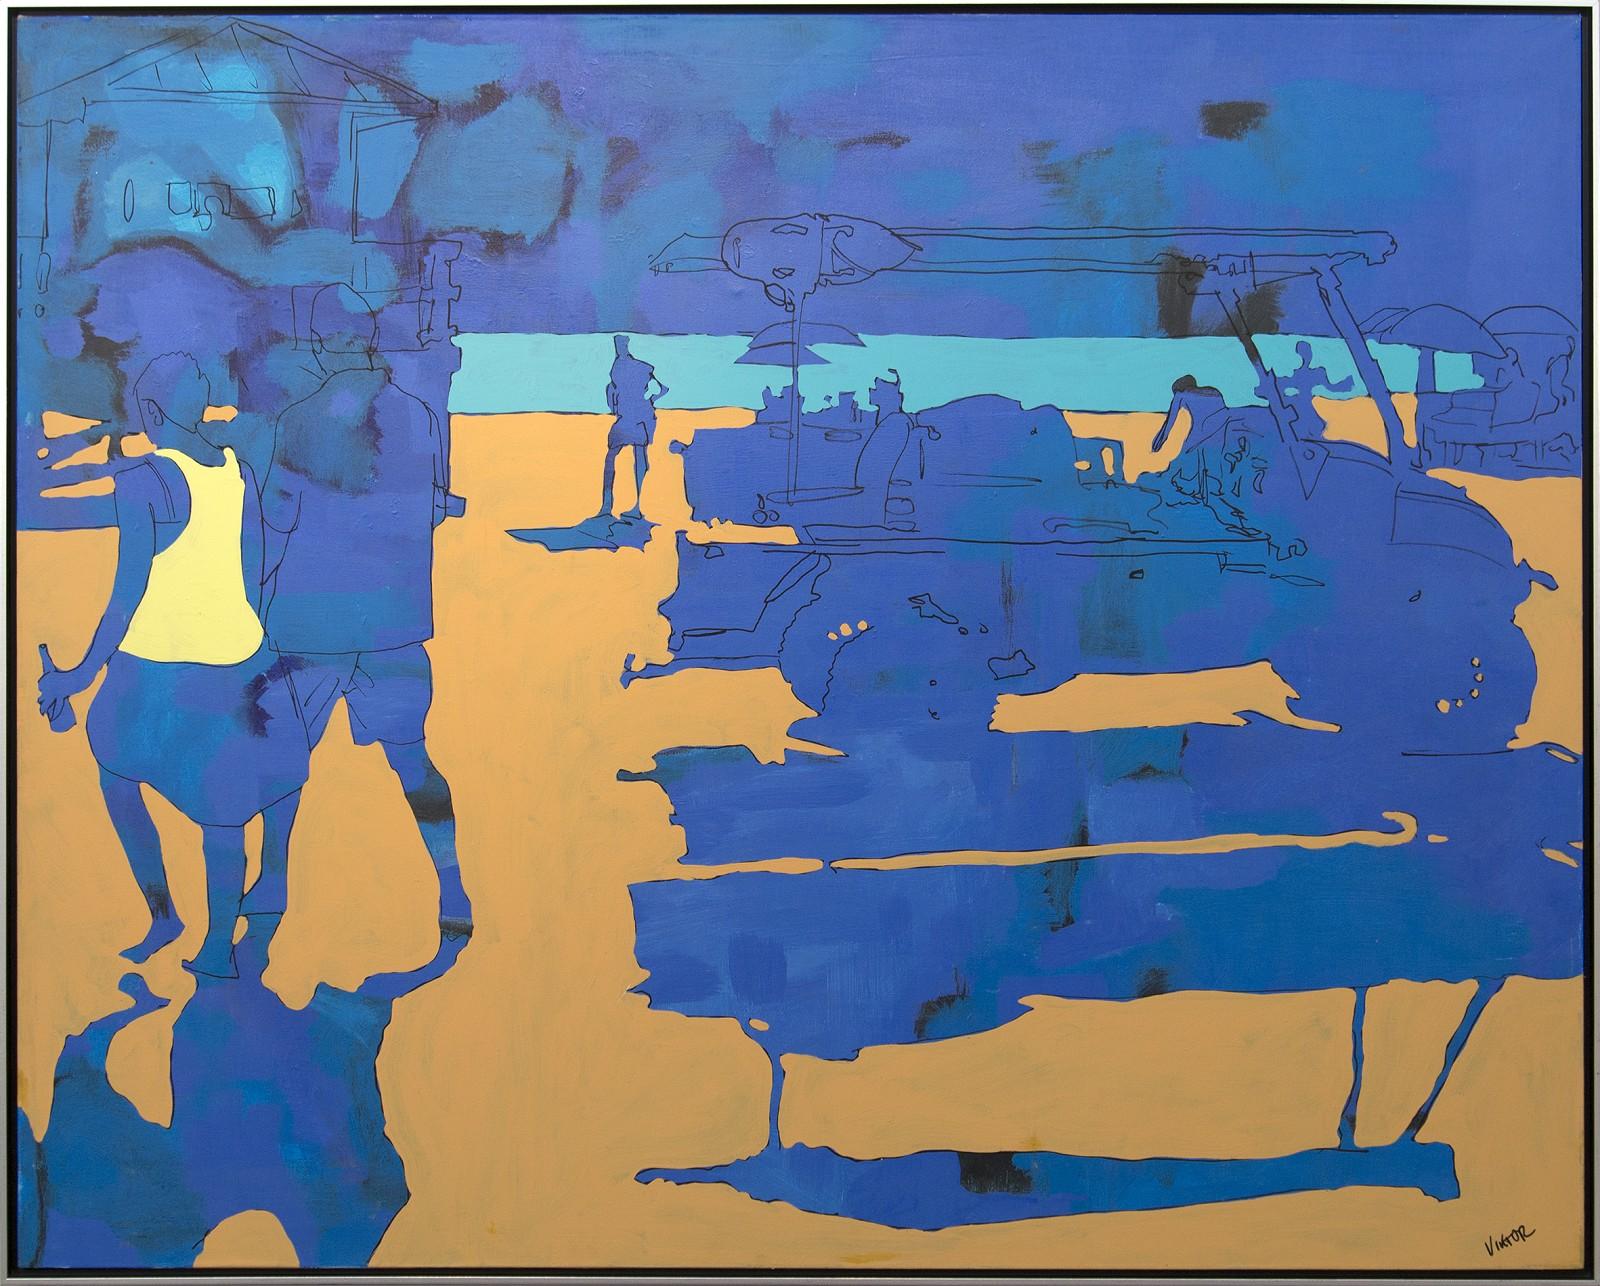 Blazing Blue - large, graphic, figurative, pop-art, acrylic on canvas